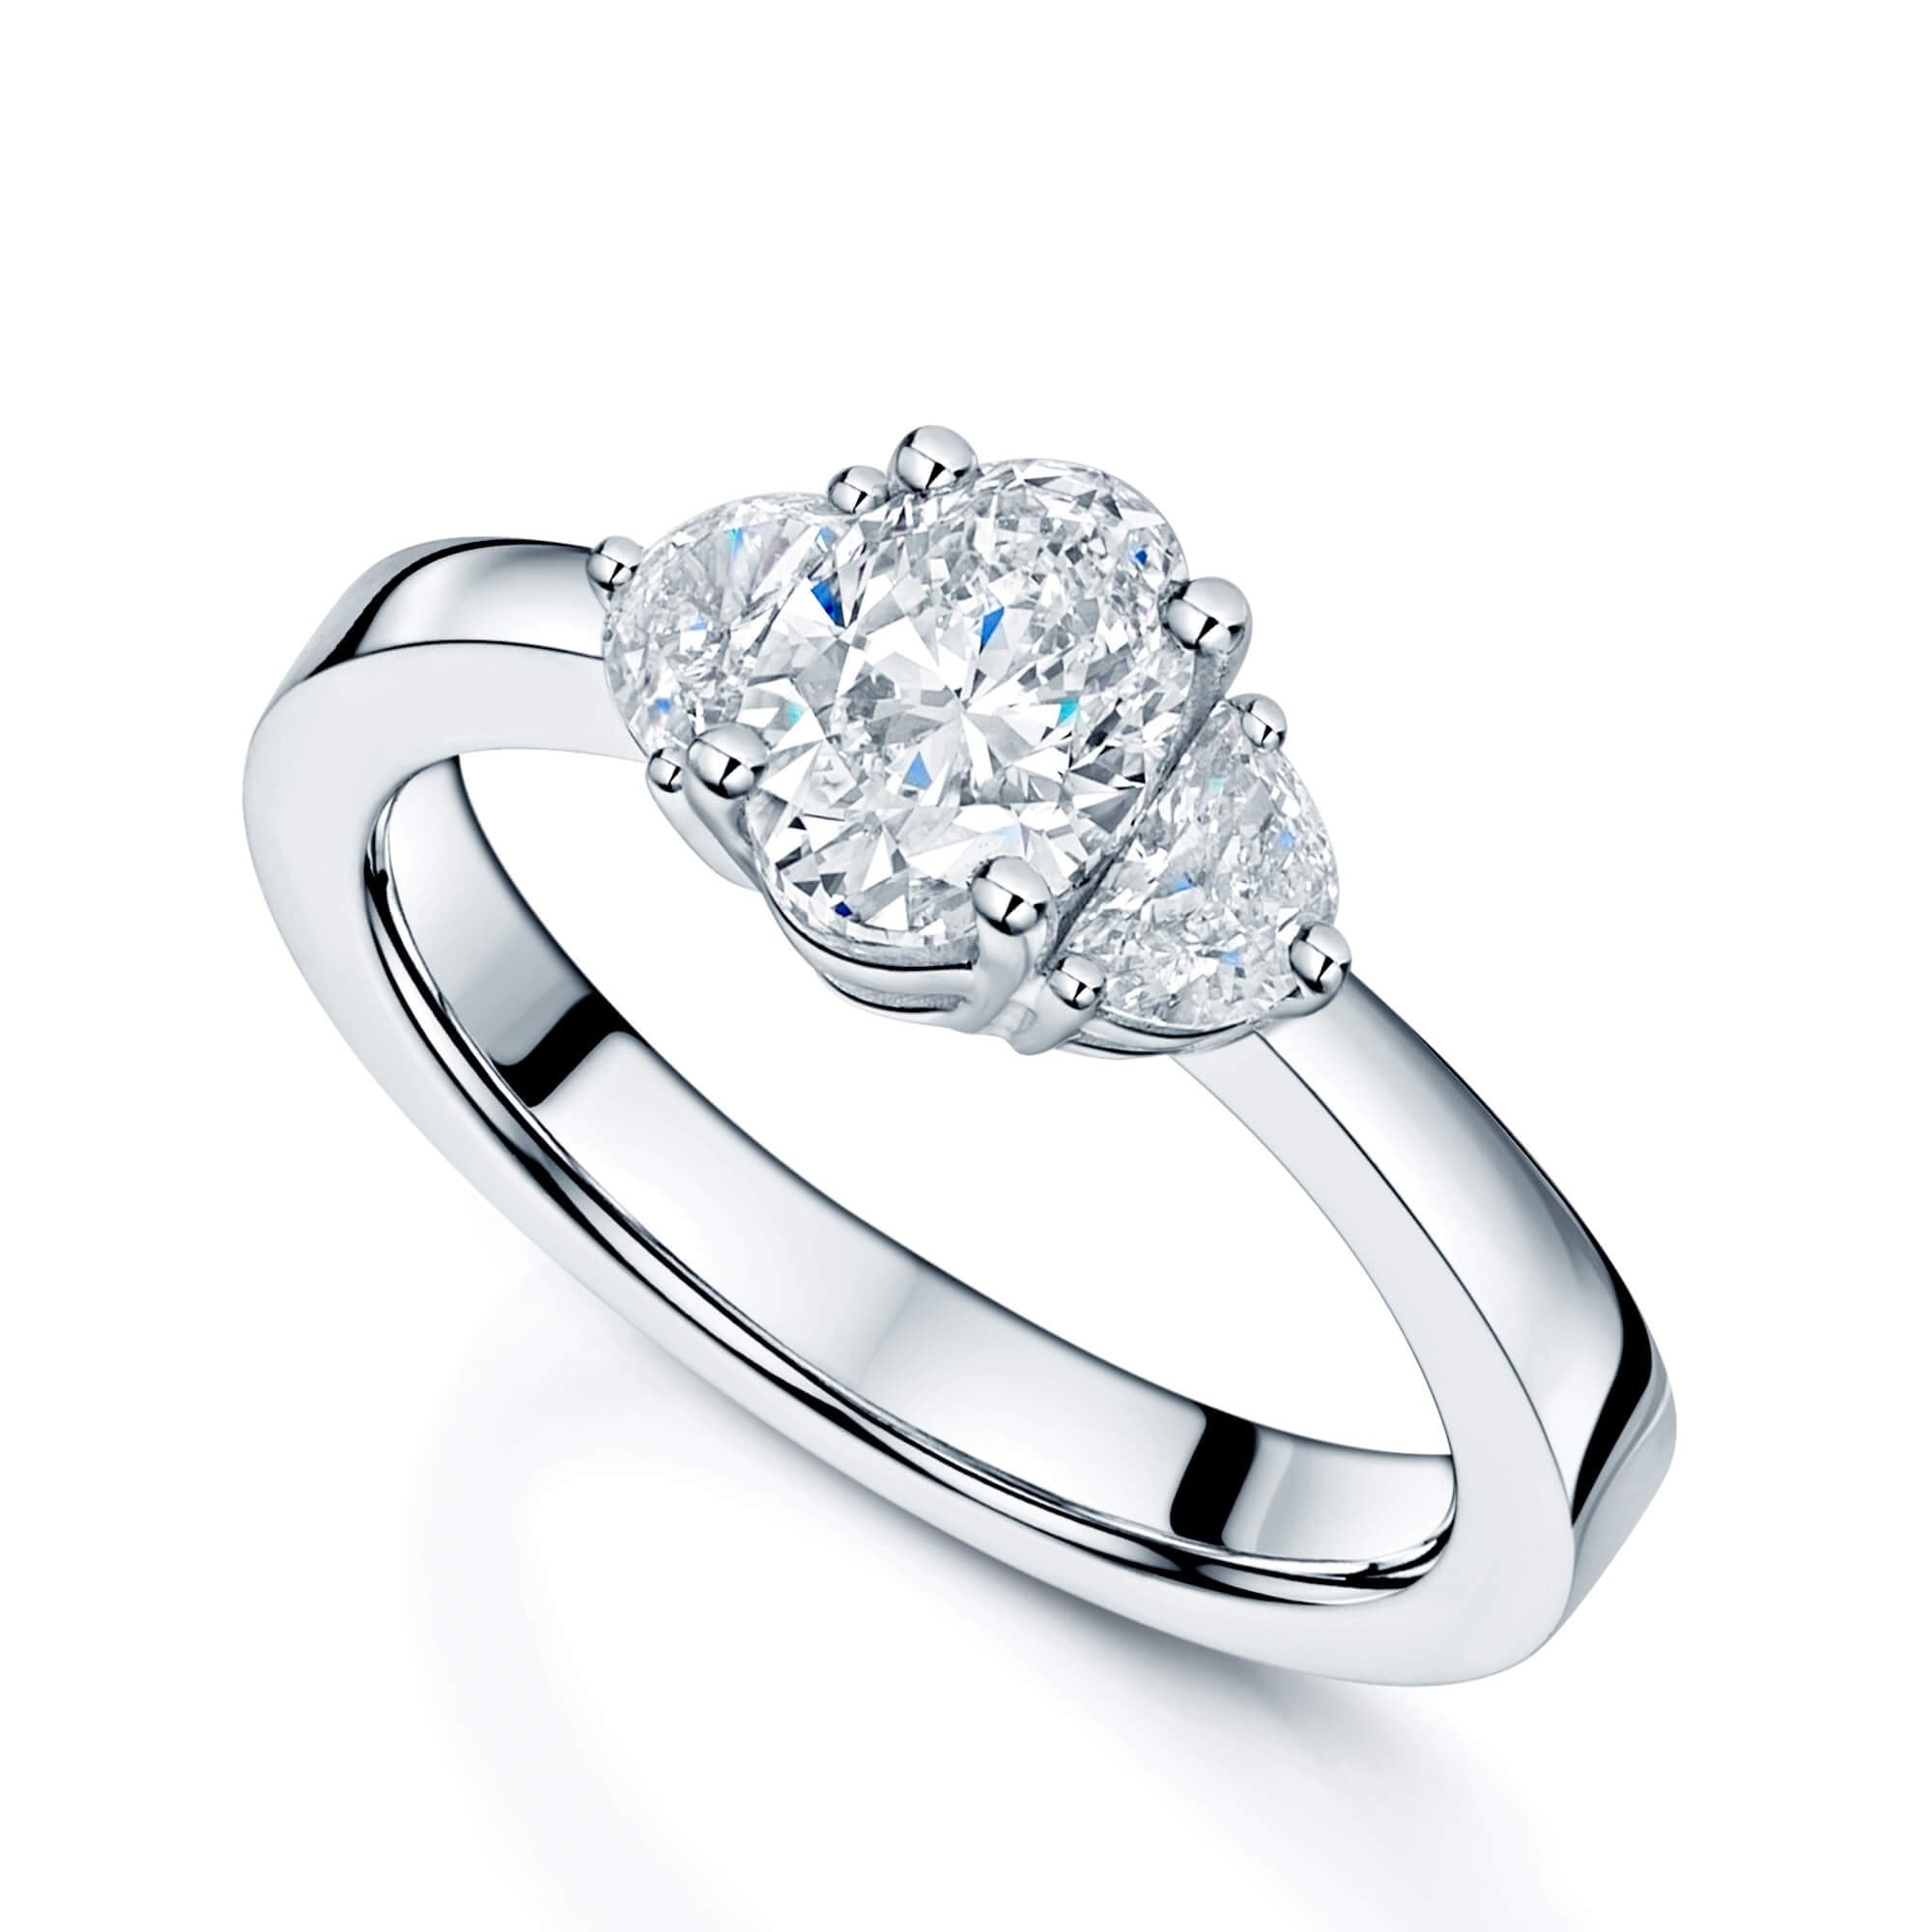 Platinum GIA Certificated Oval Cut Diamond Three Stone Ring With Half Moon Diamond Shoulders